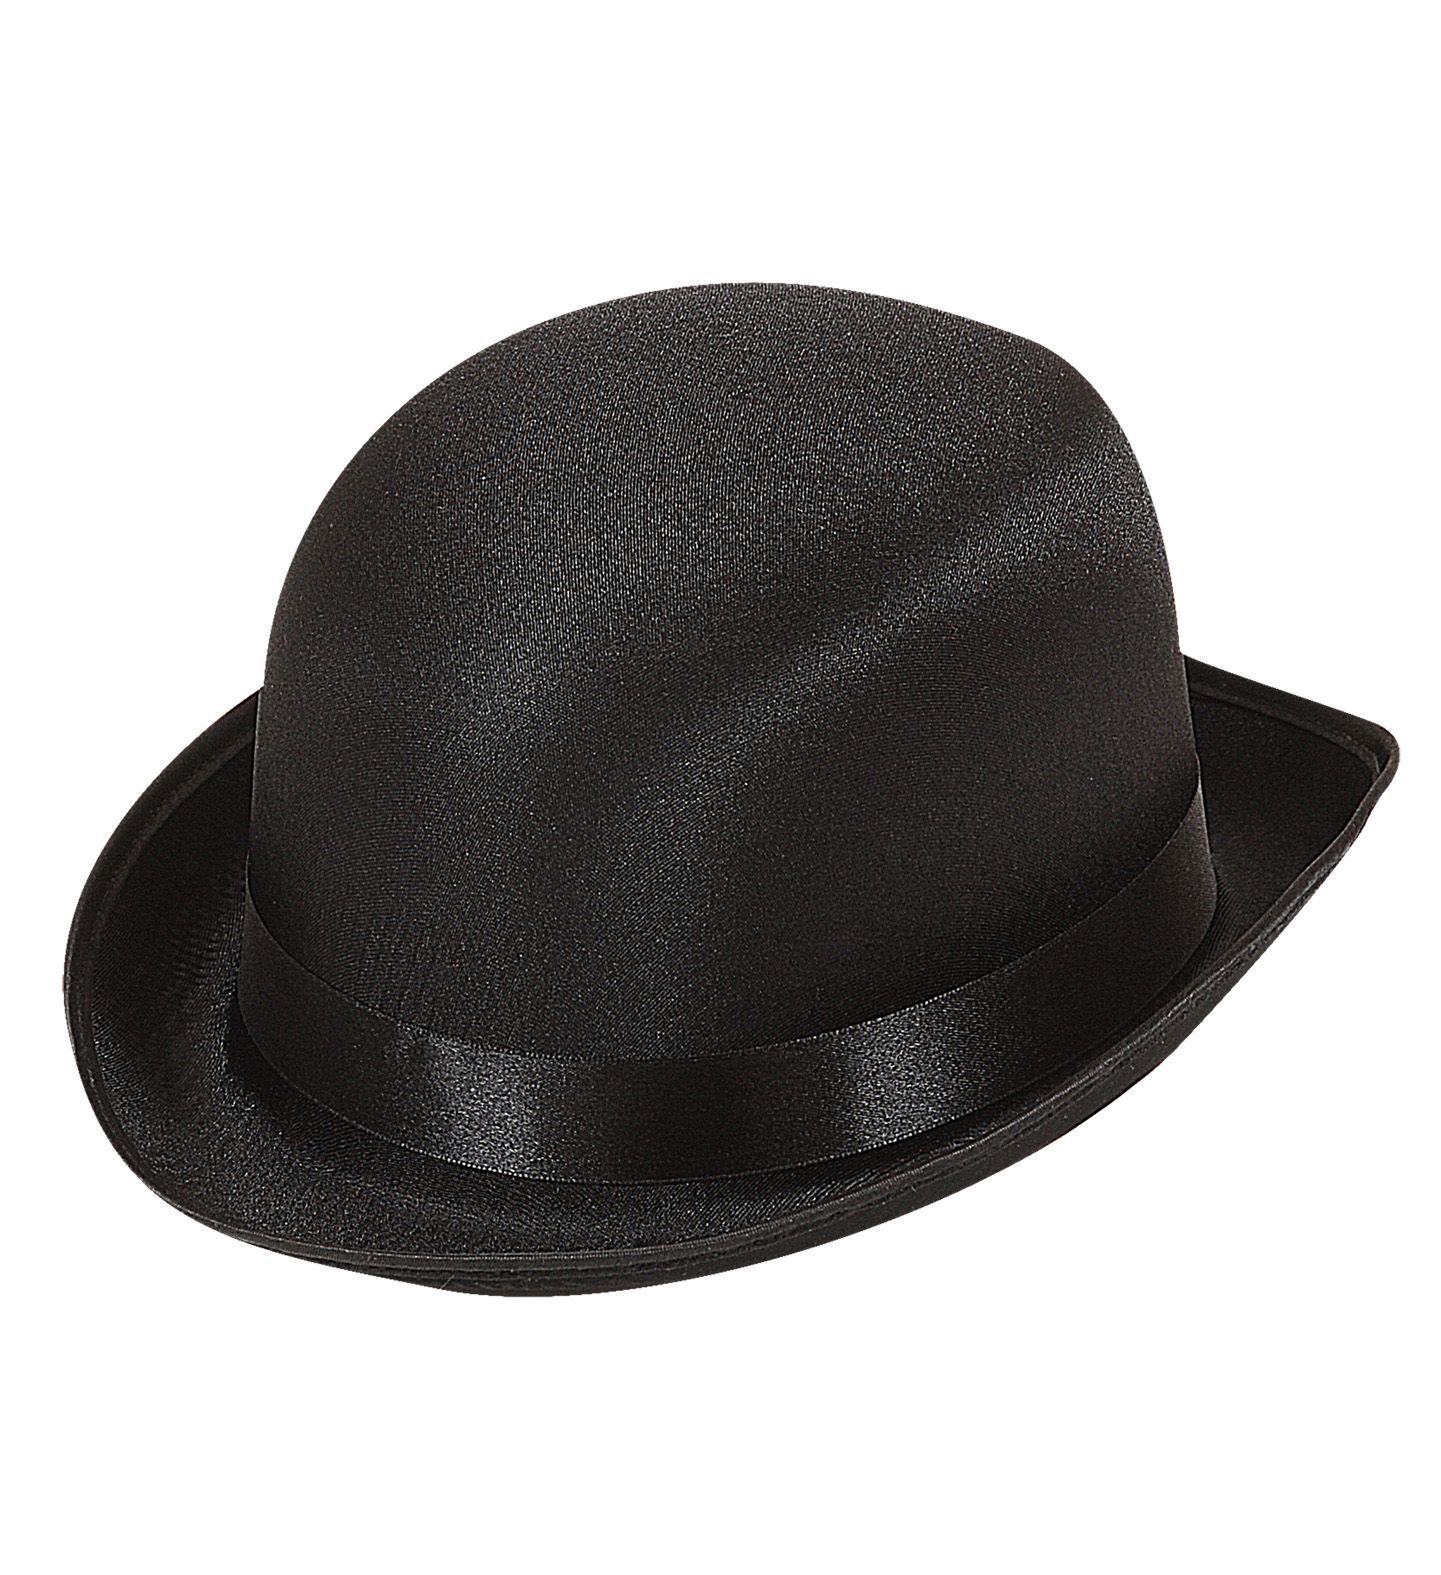 Bowler hat. Шляпа Боулер. Шляпа Чаплина. Шляпа трилби черная. Шляпа котелок мужская.